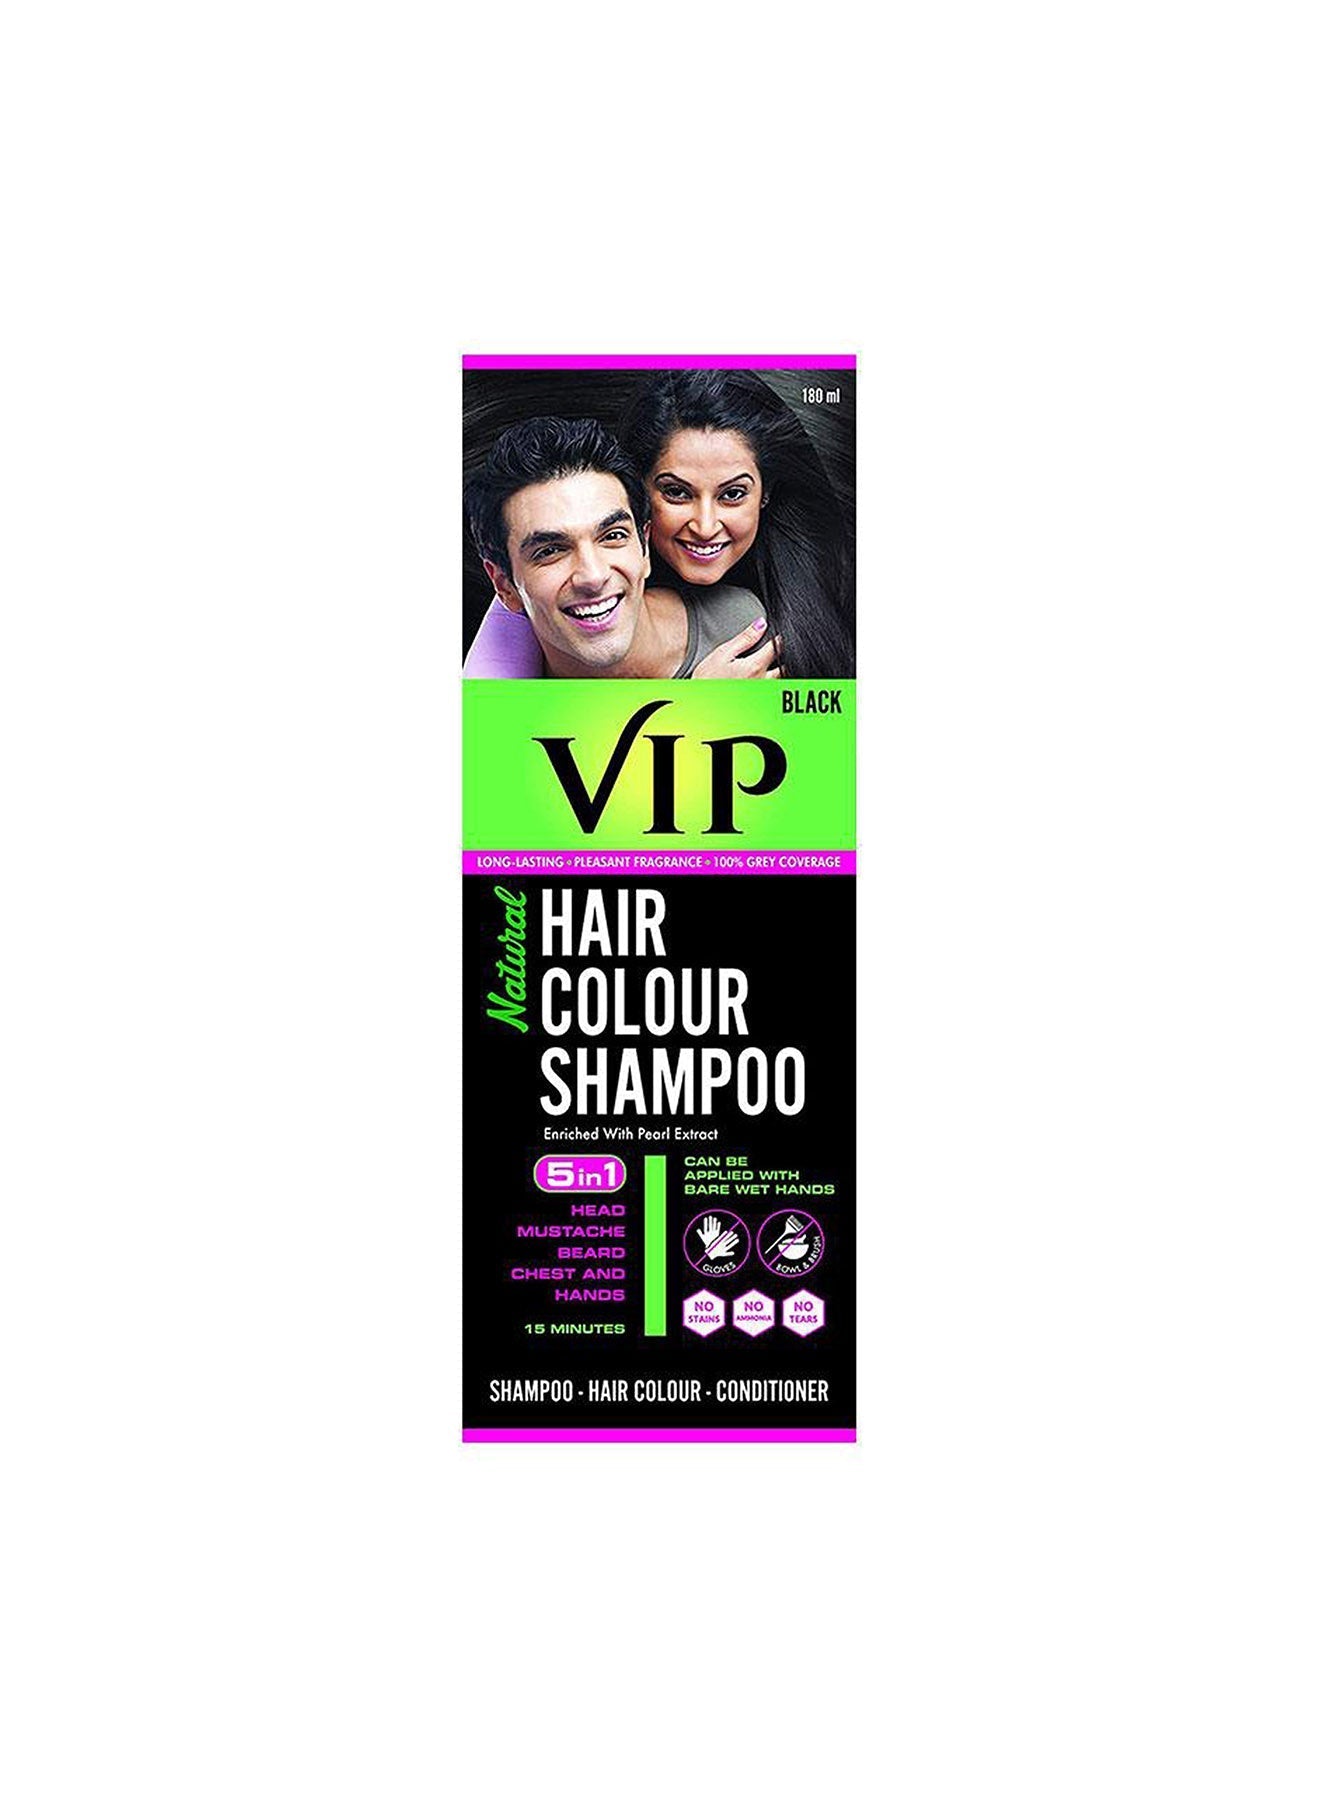 VIP Natural Hair Color Shampoo Black 180ml Value Pack of 2 